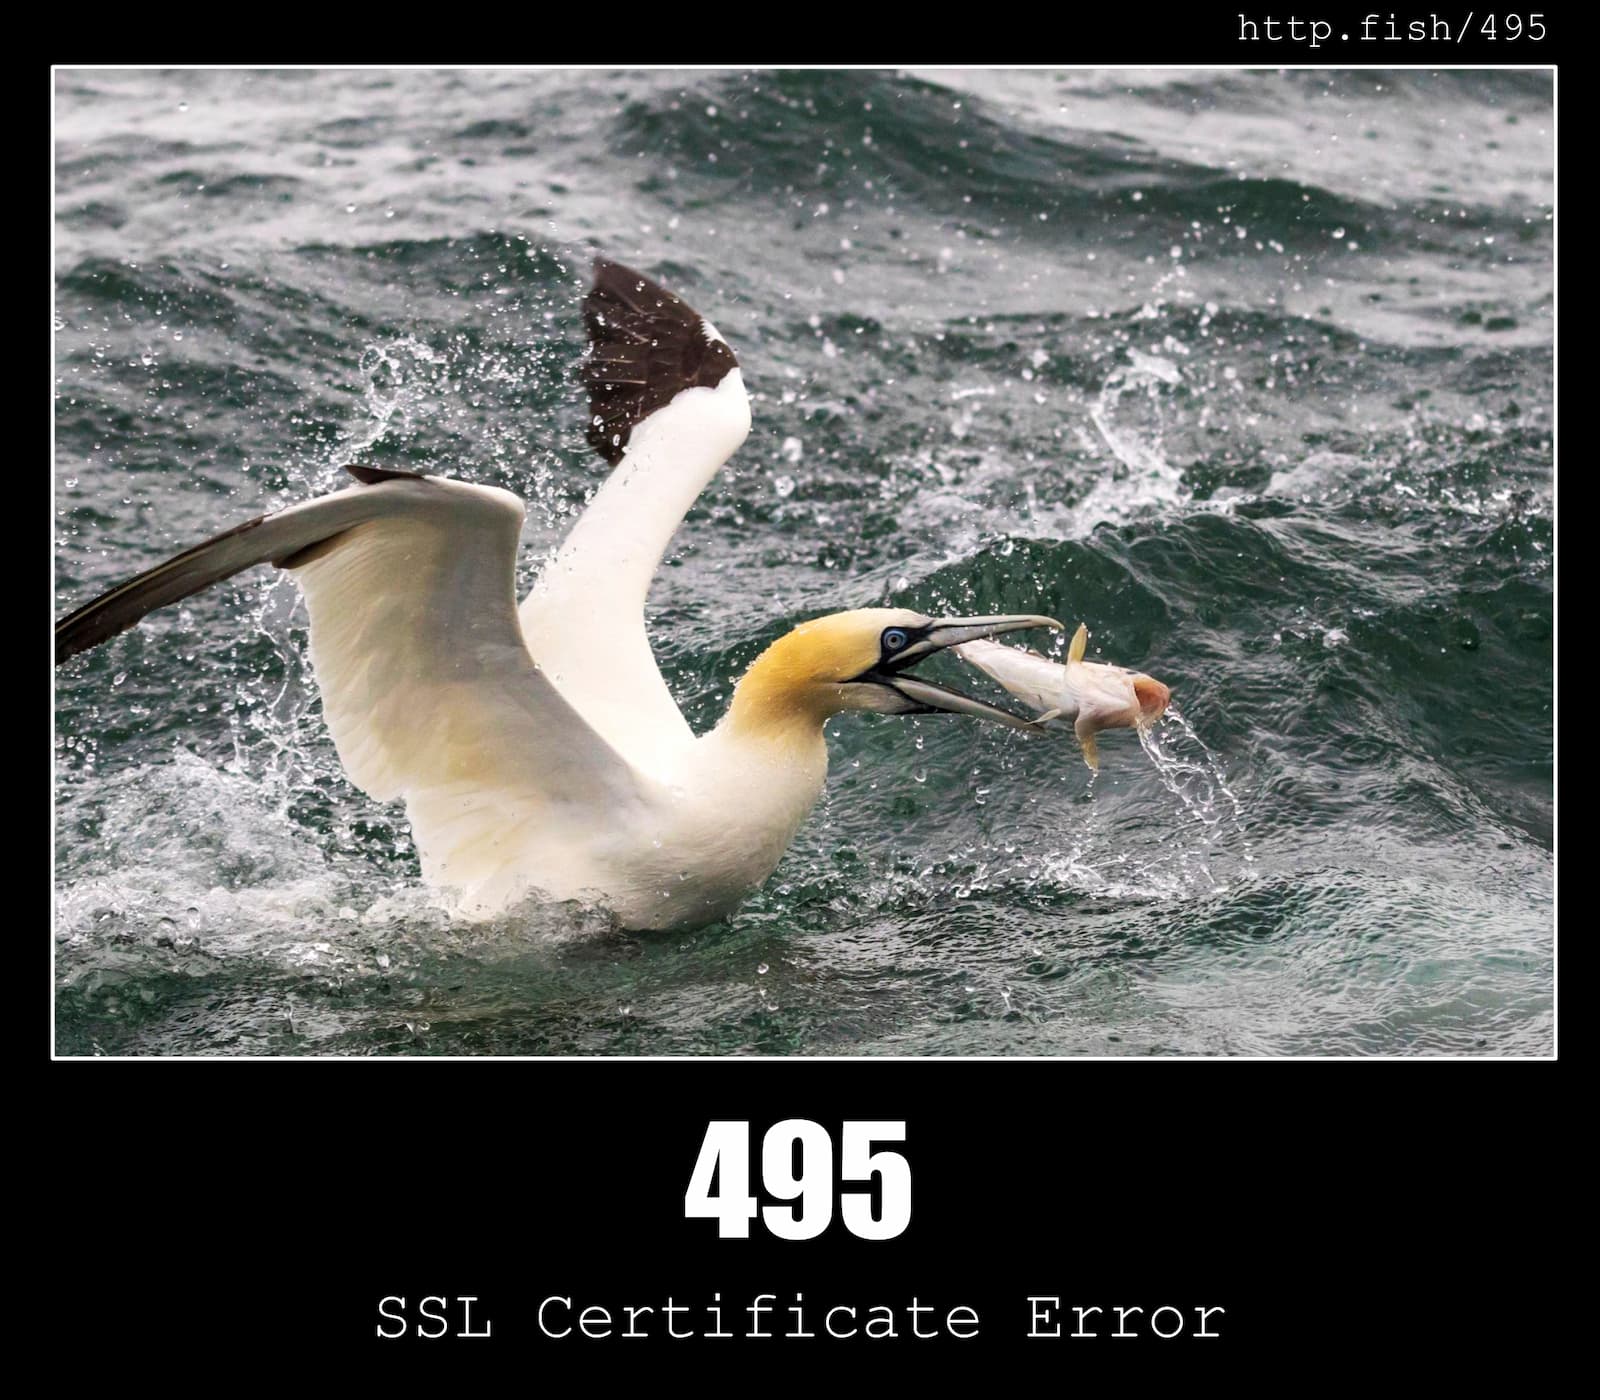 HTTP Status Code 495 SSL Certificate Error & Fish